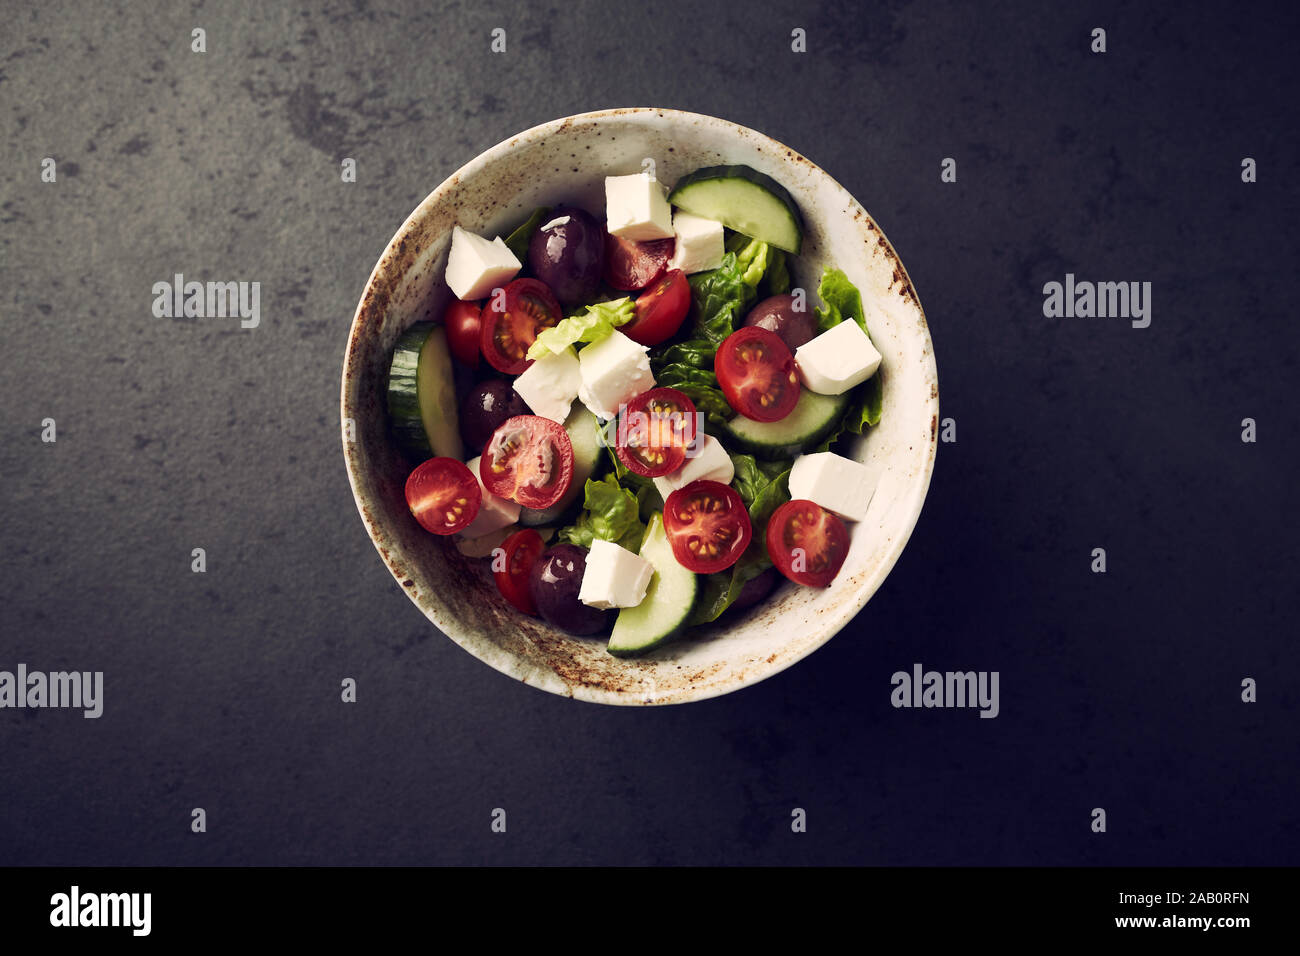 Salad with Kalamata Olives, Cucumber Cherry Tomatoes and Feta Cheese on black Stone Background. Stock Photo